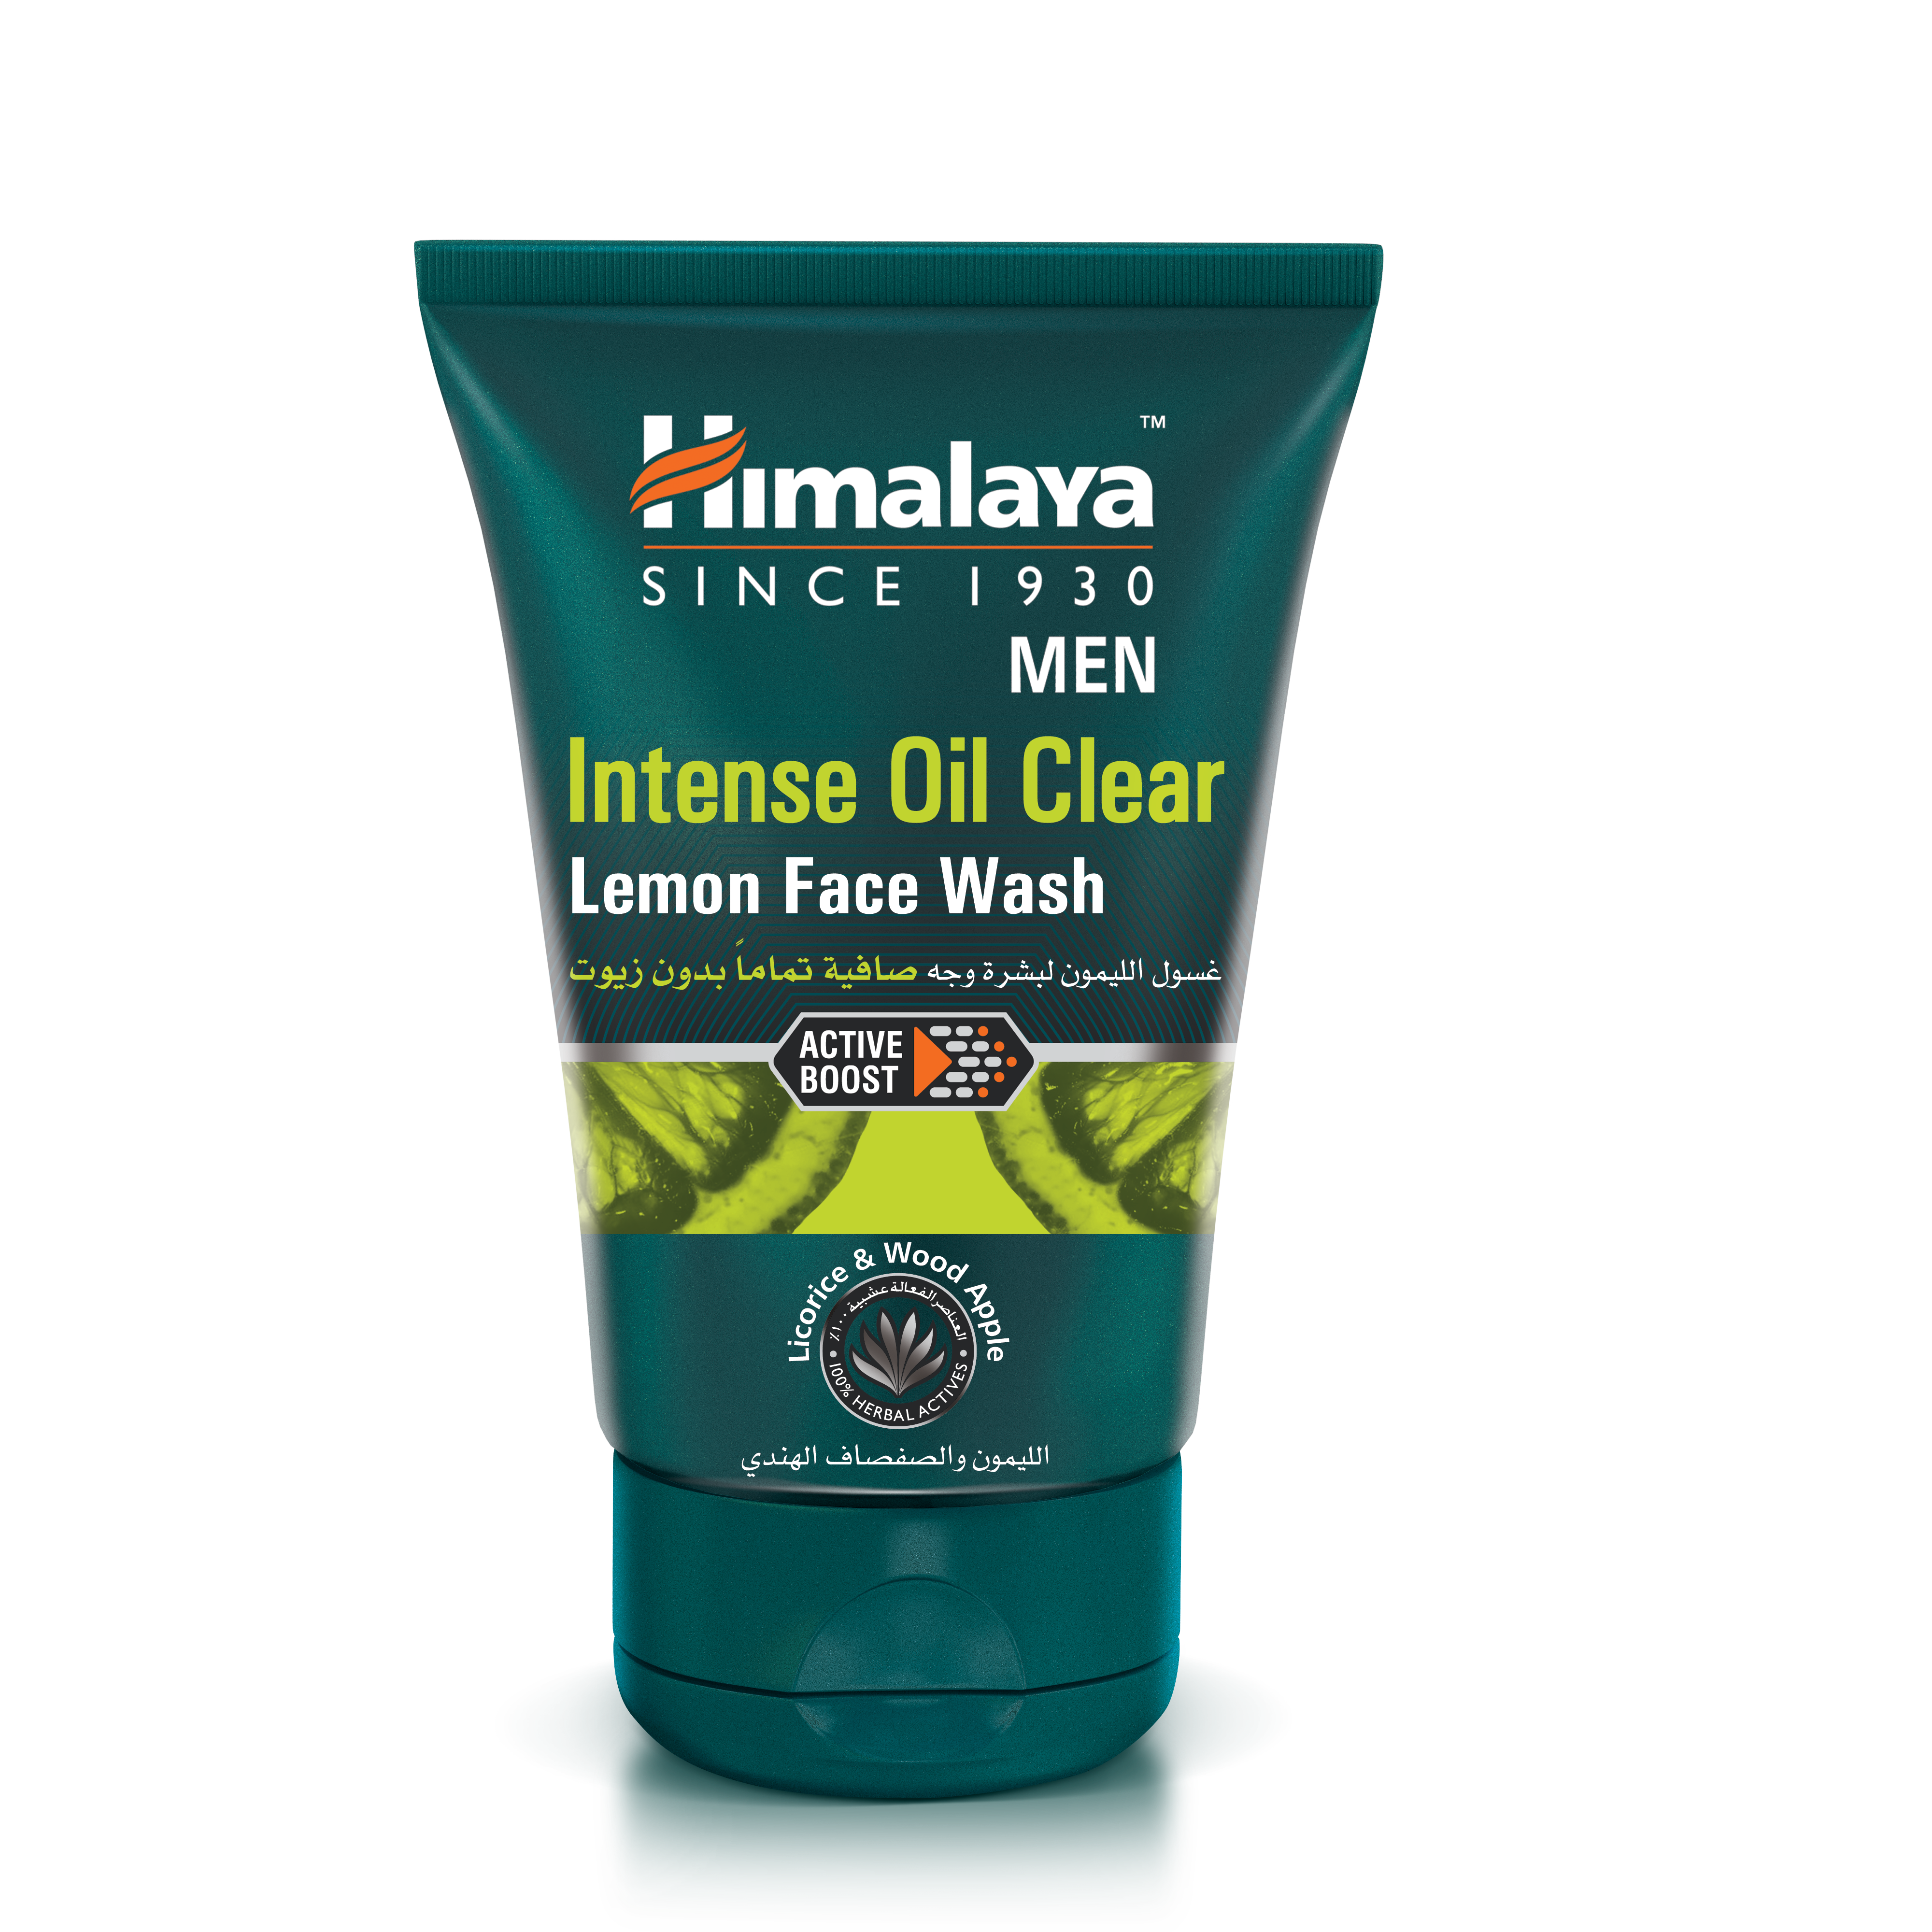 Intense Oil Clear Lemon Face Wash 100ml